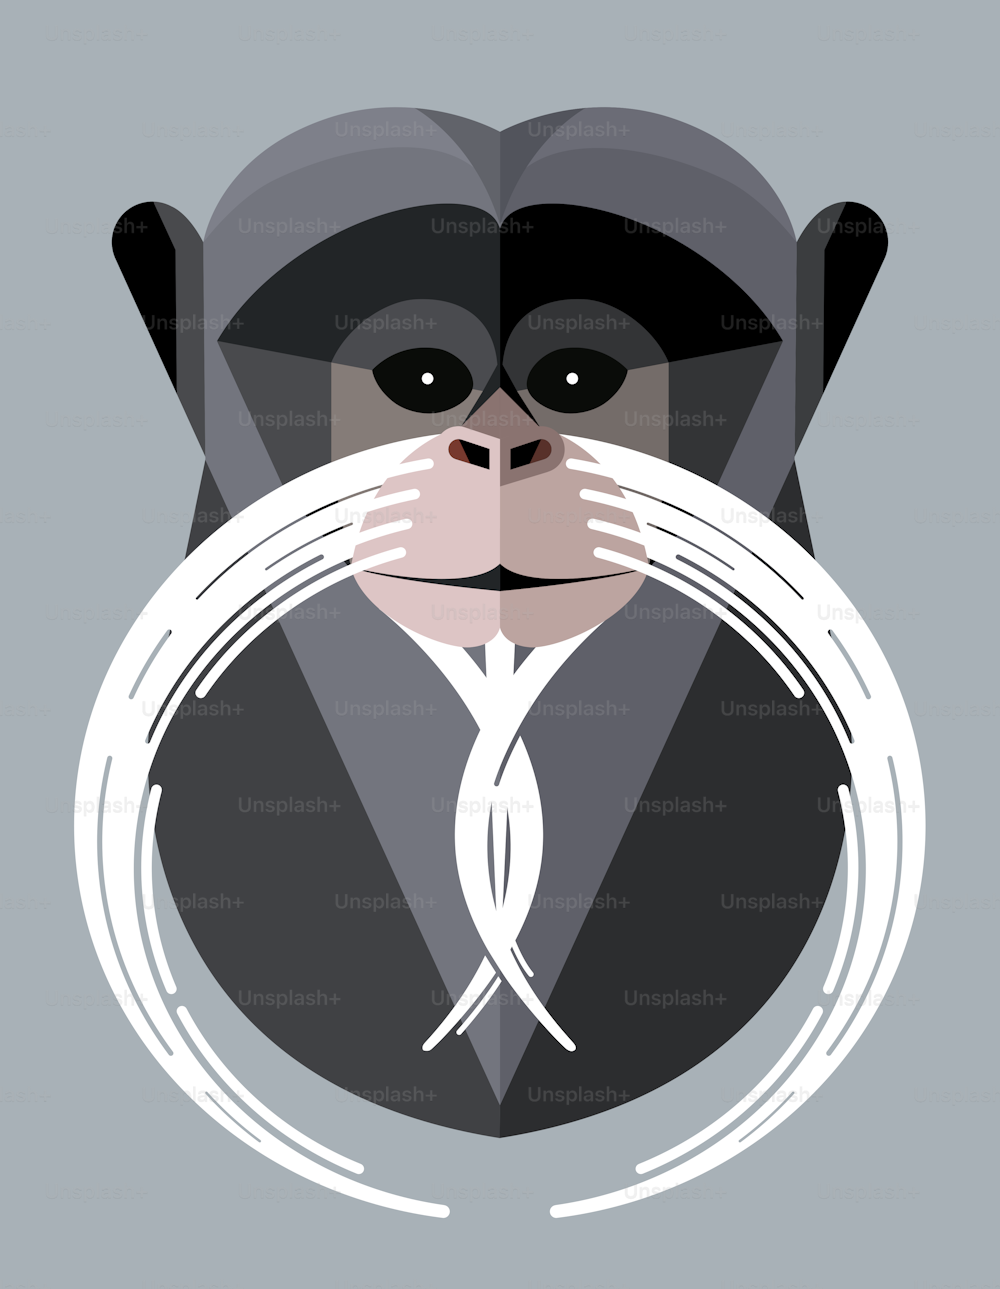 Cabeza de mono tití emperador sobre fondo gris, imagen vectorial estilizada